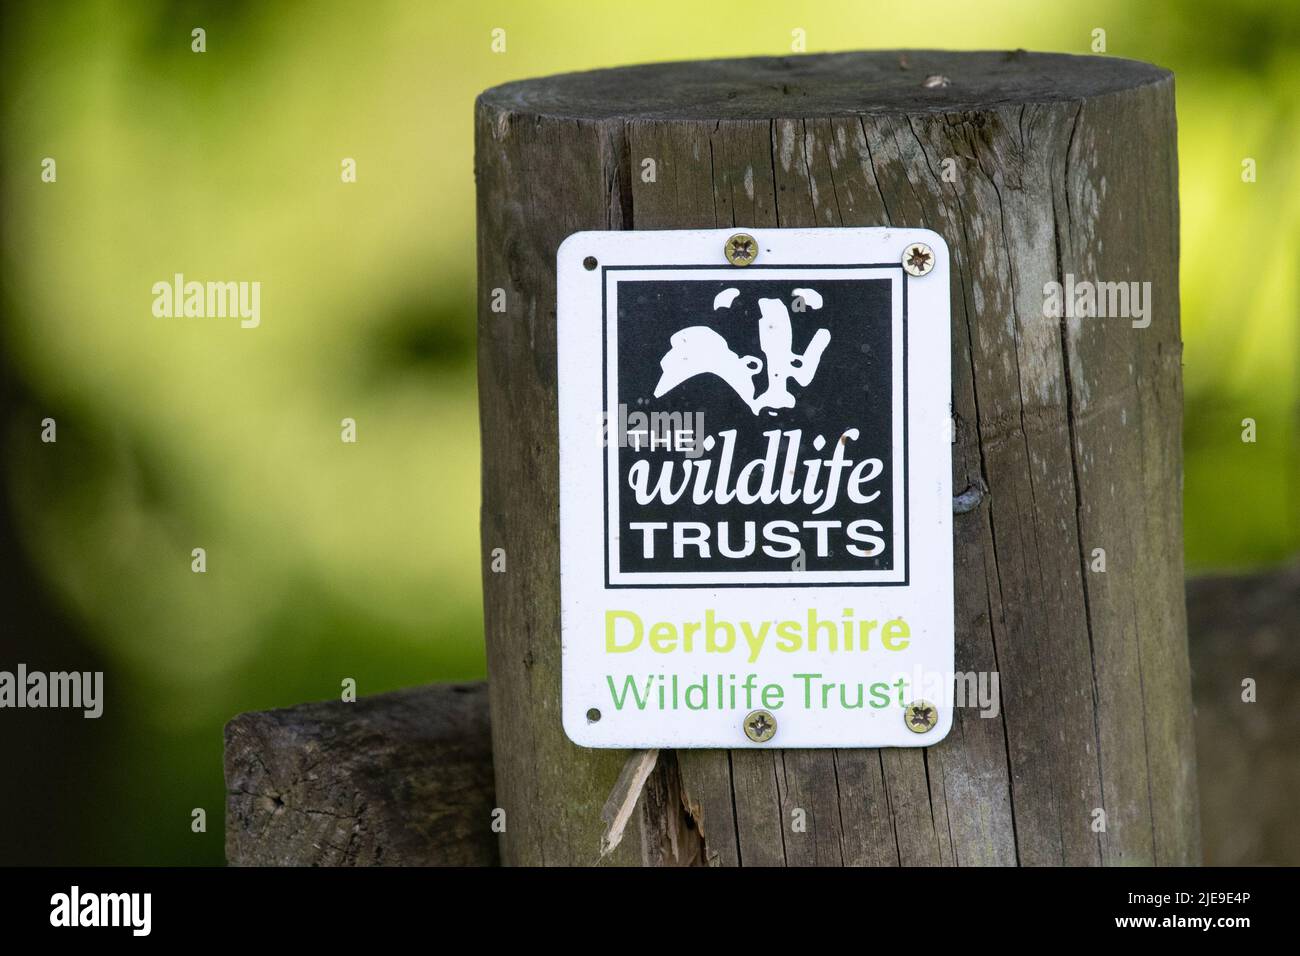 Derbyshire Wildlife Trust sign Stock Photo